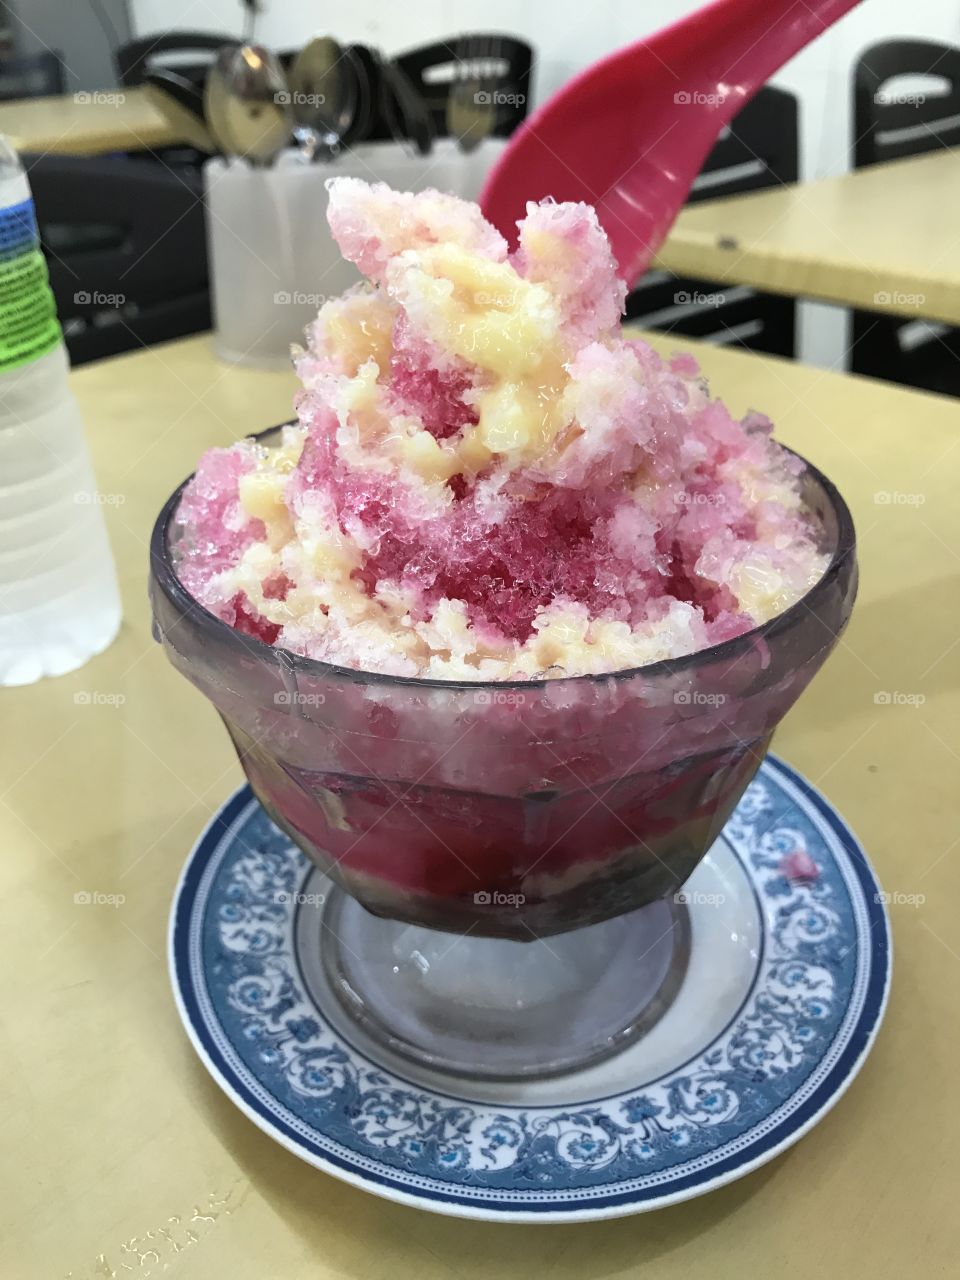 Taste of Ice Kacang, Malaysian desserts. Malaysian specials.